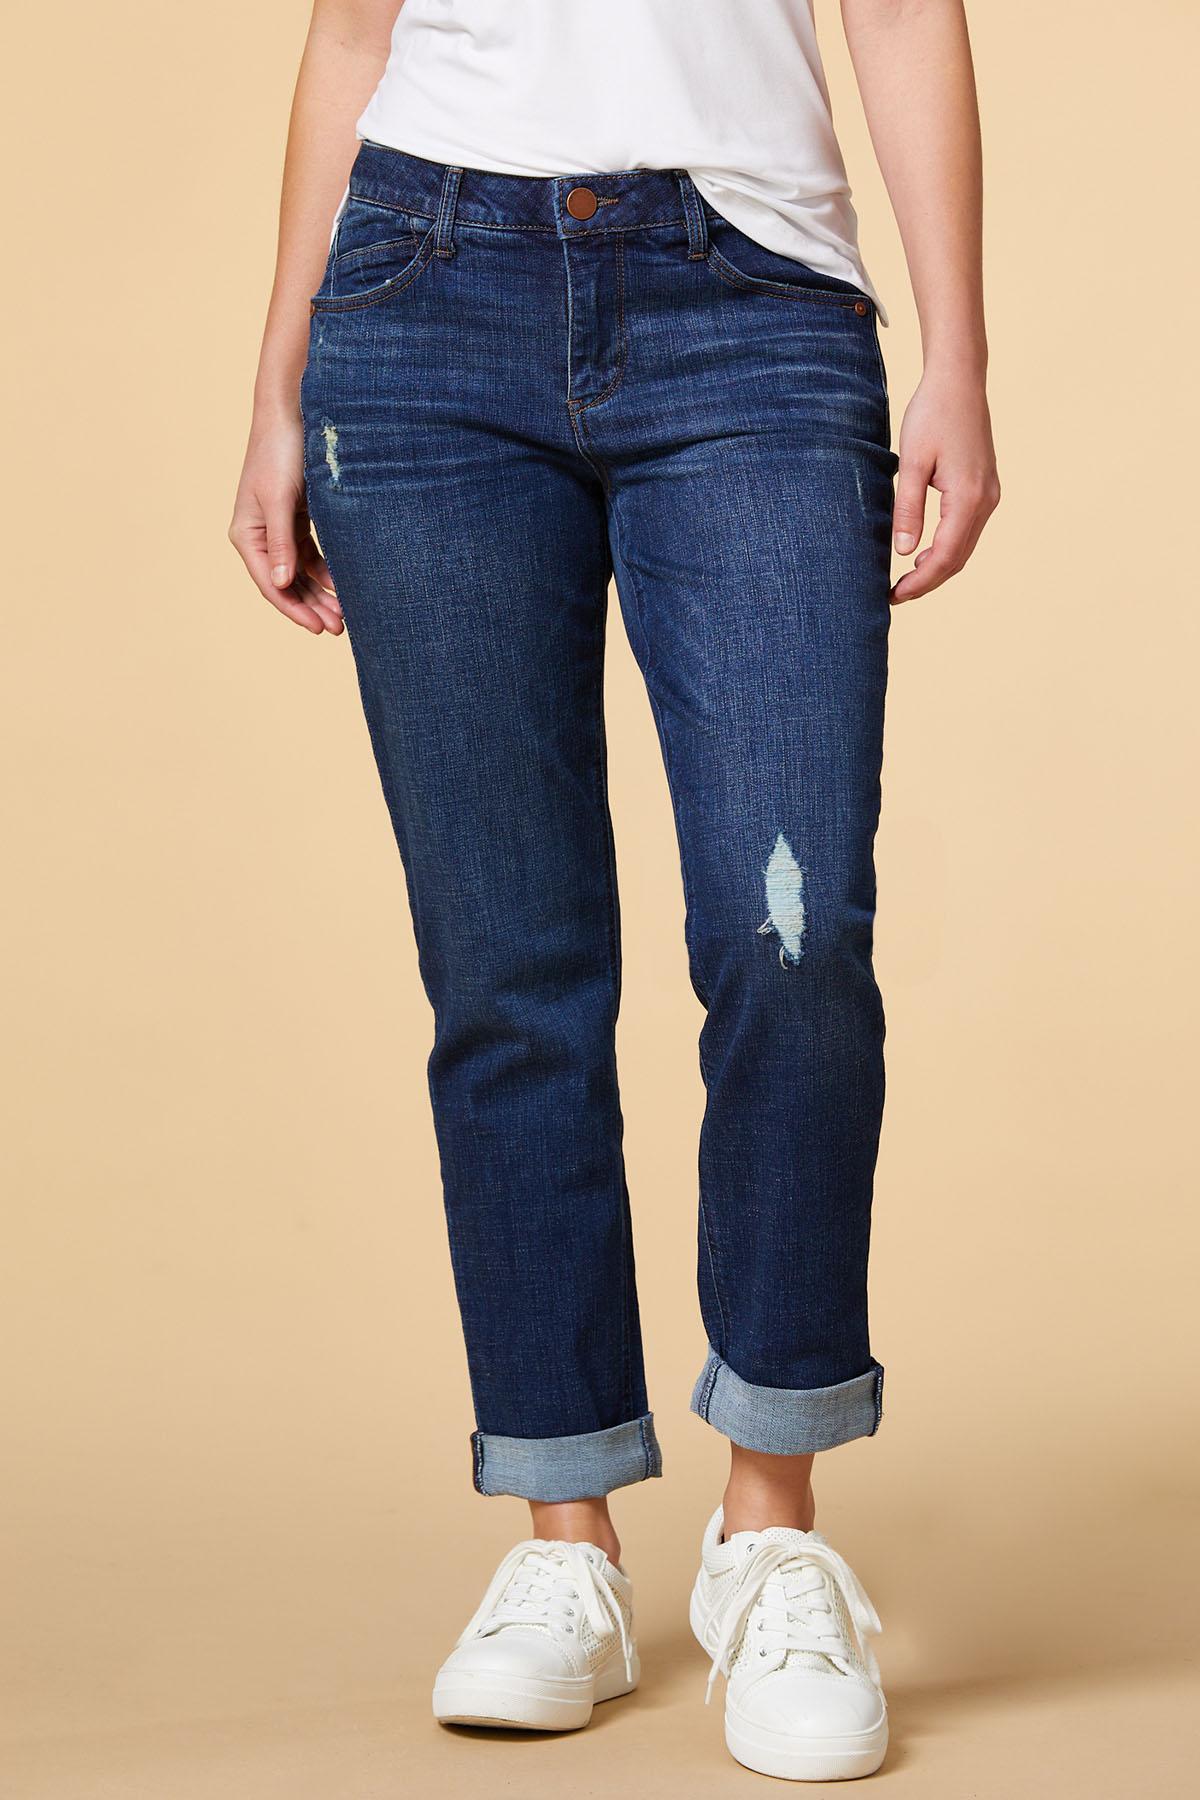 Versona | hey girlfriend jeans